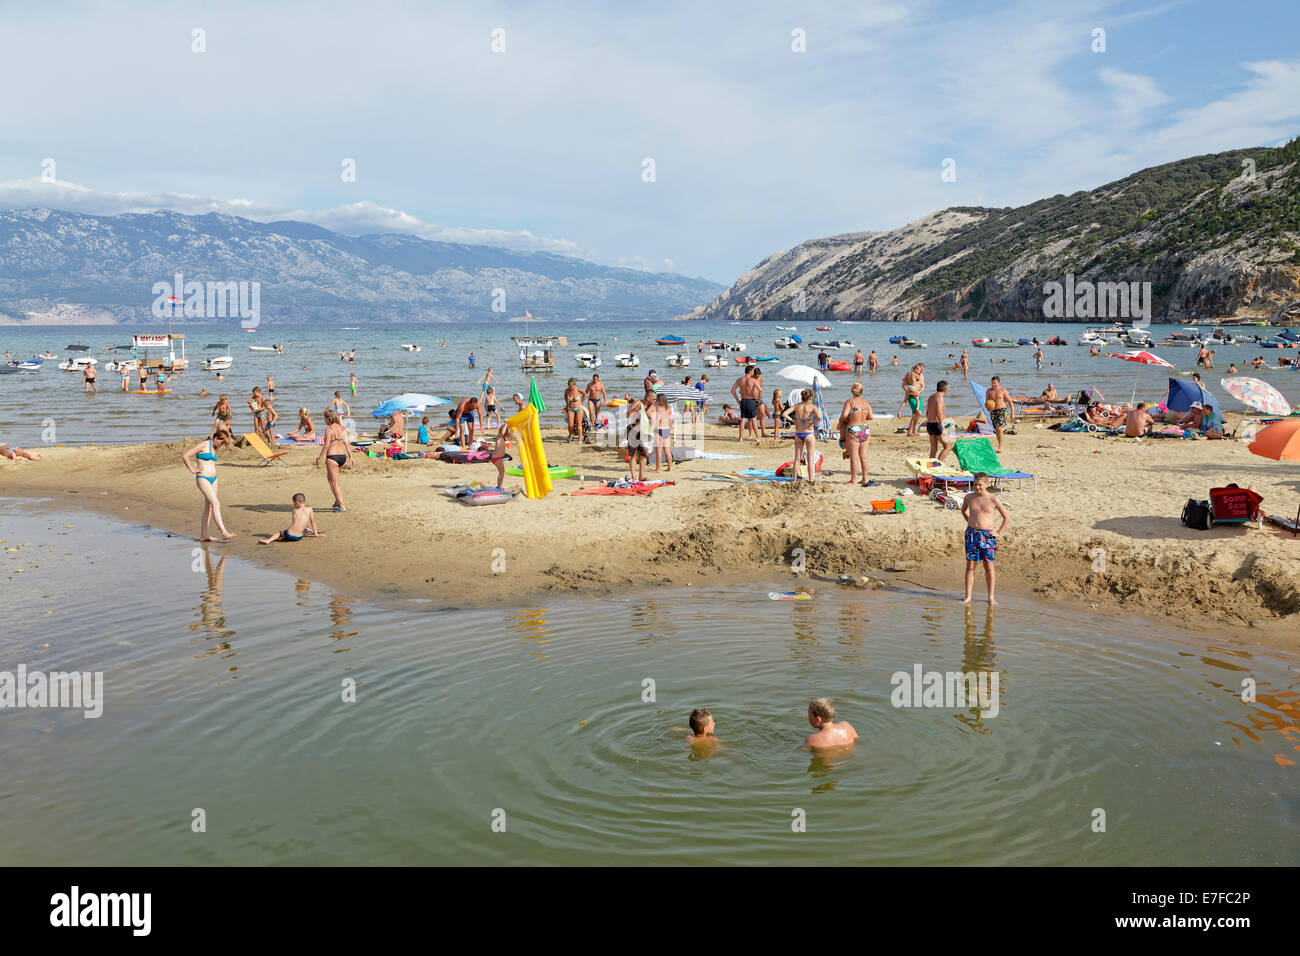 San Marino Beach, Lopar, Rab Island, Kvarner Gulf, Croatia Stock Photo